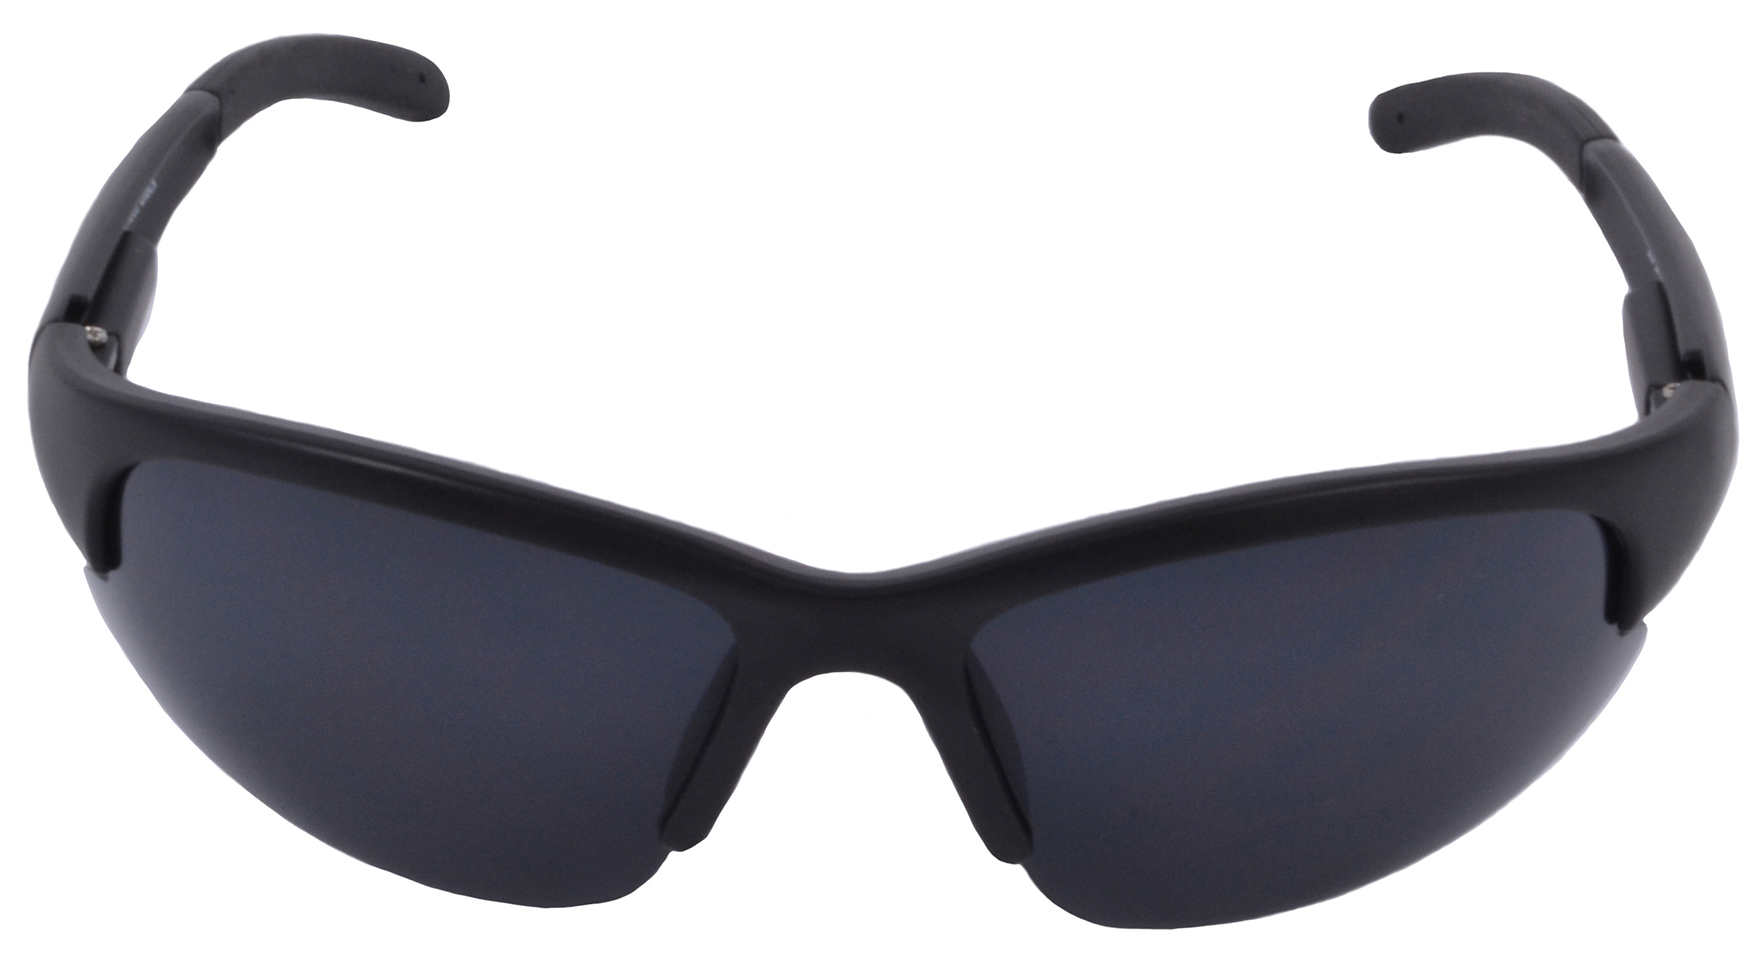 Very dark category 4 sunglasses for sports